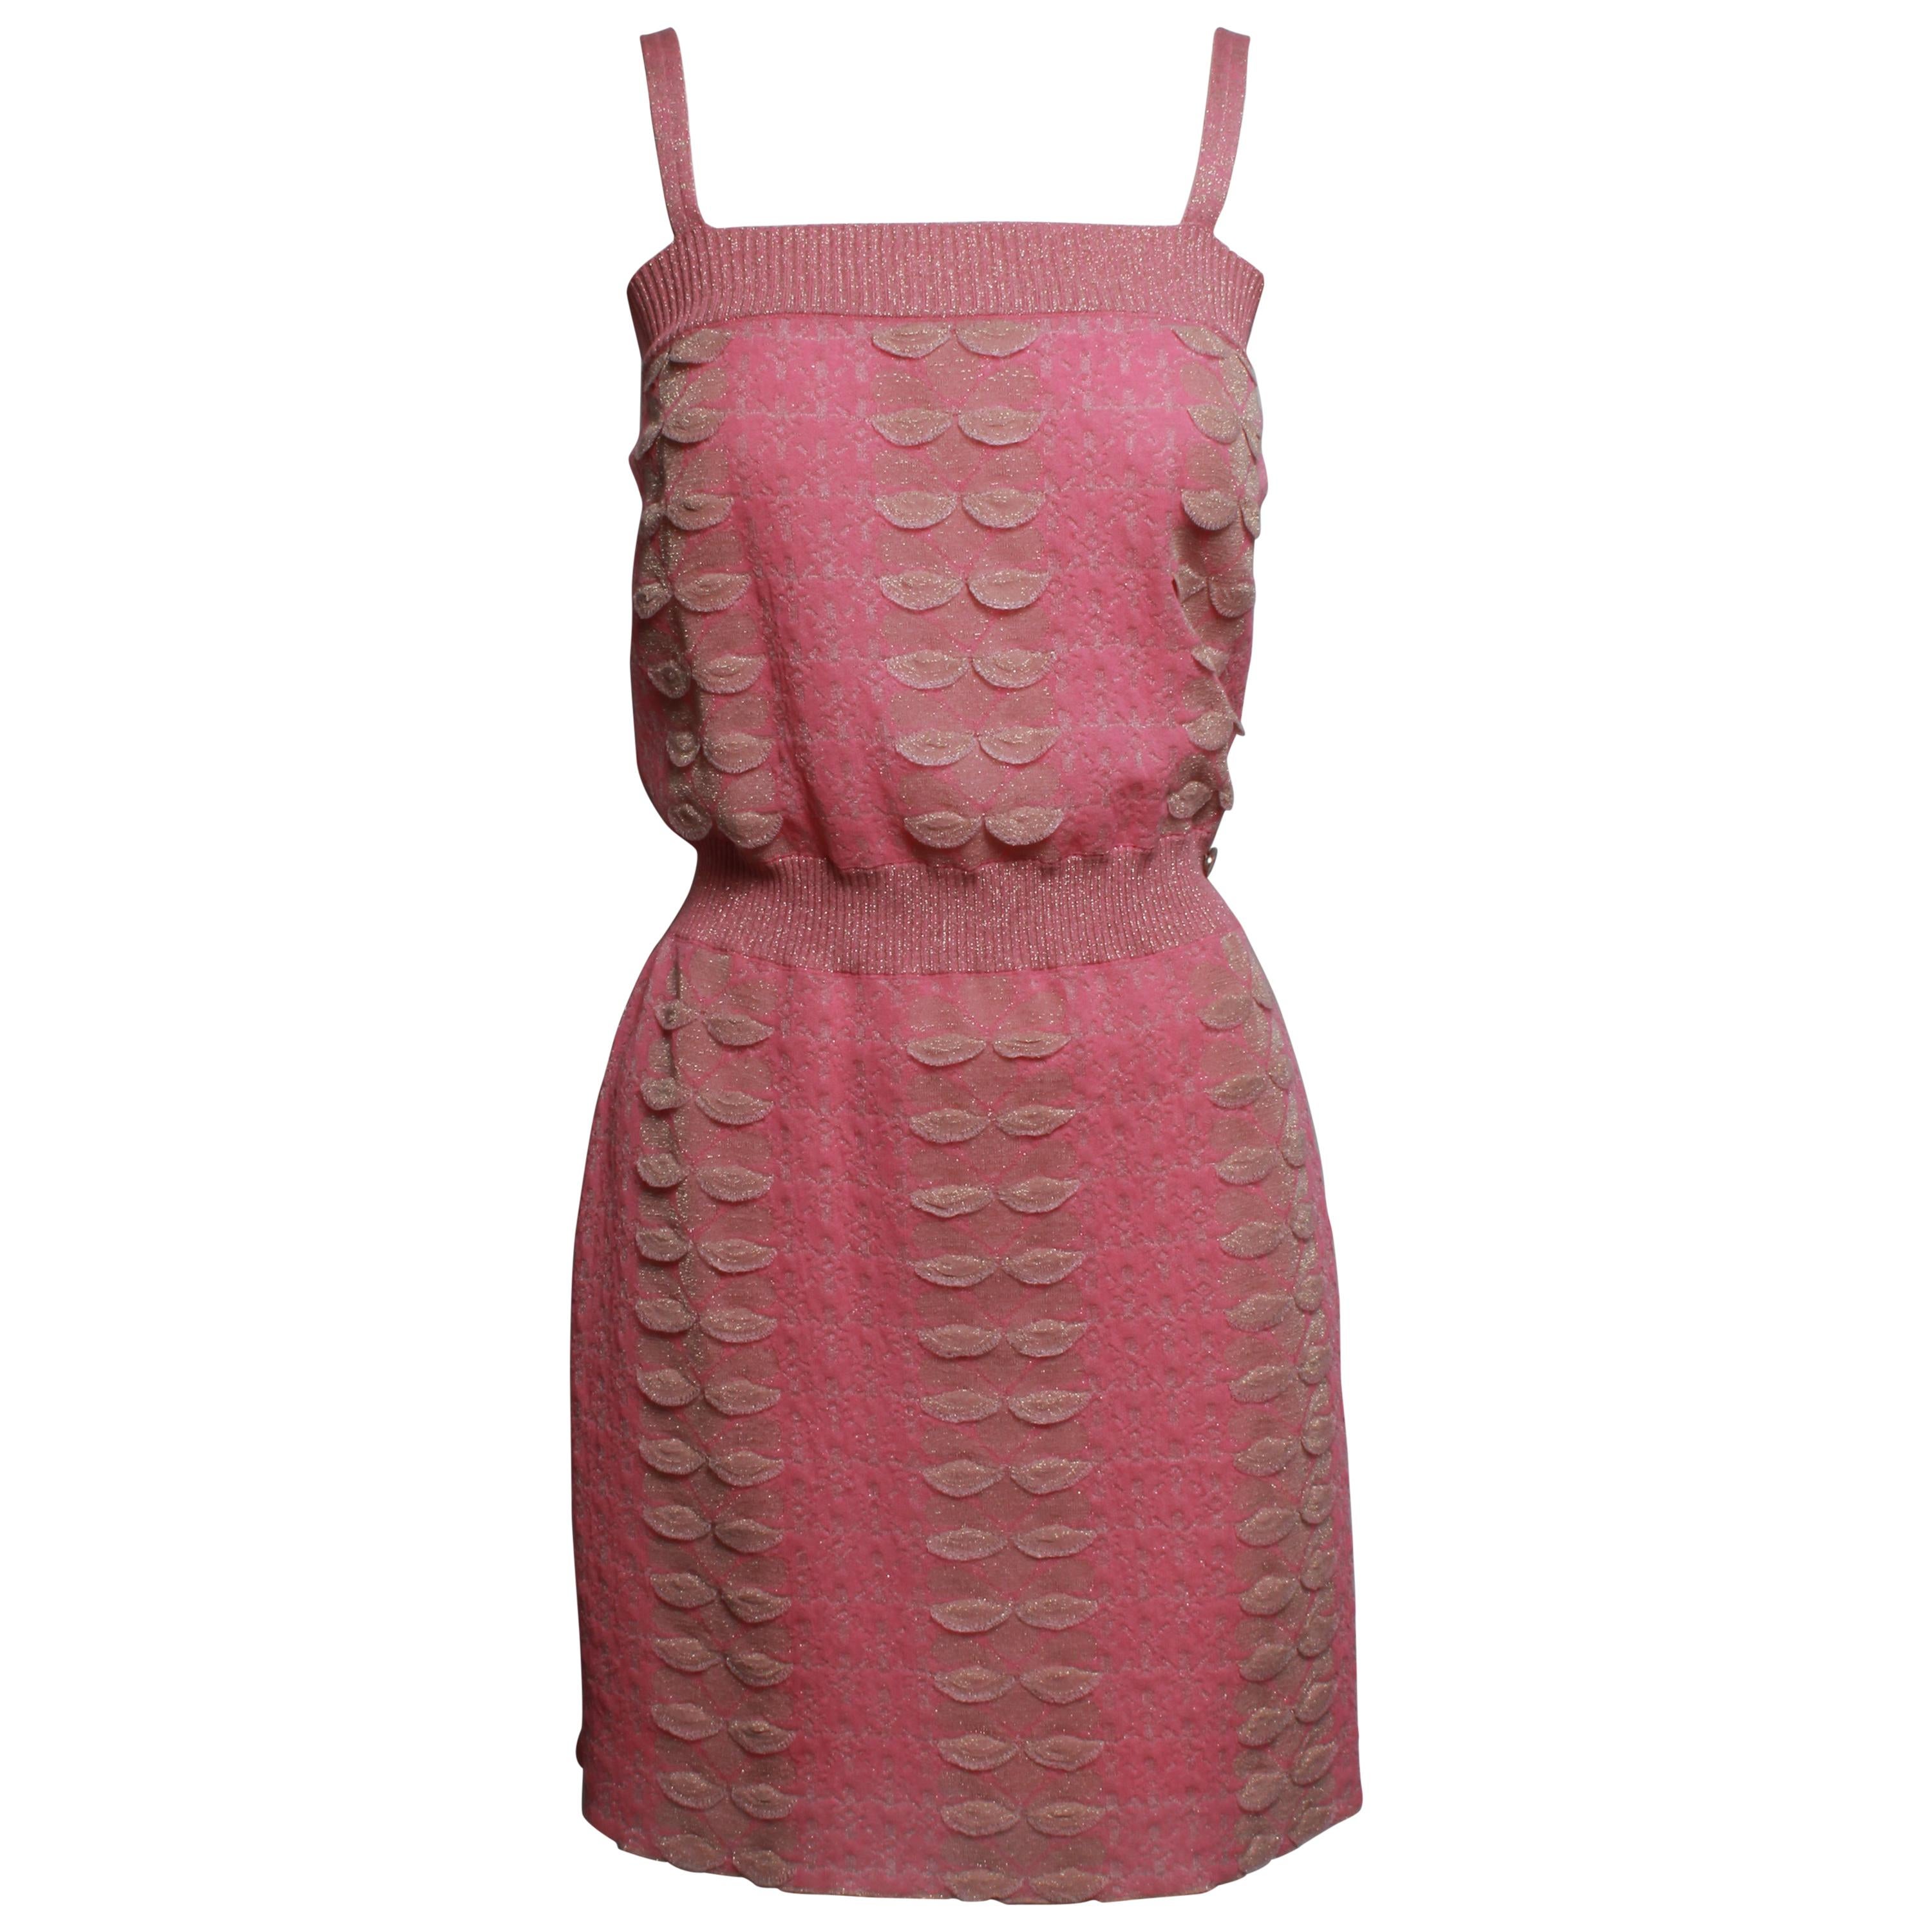 CHANEL 2016 Pink and Metallic Knit Mini Dress